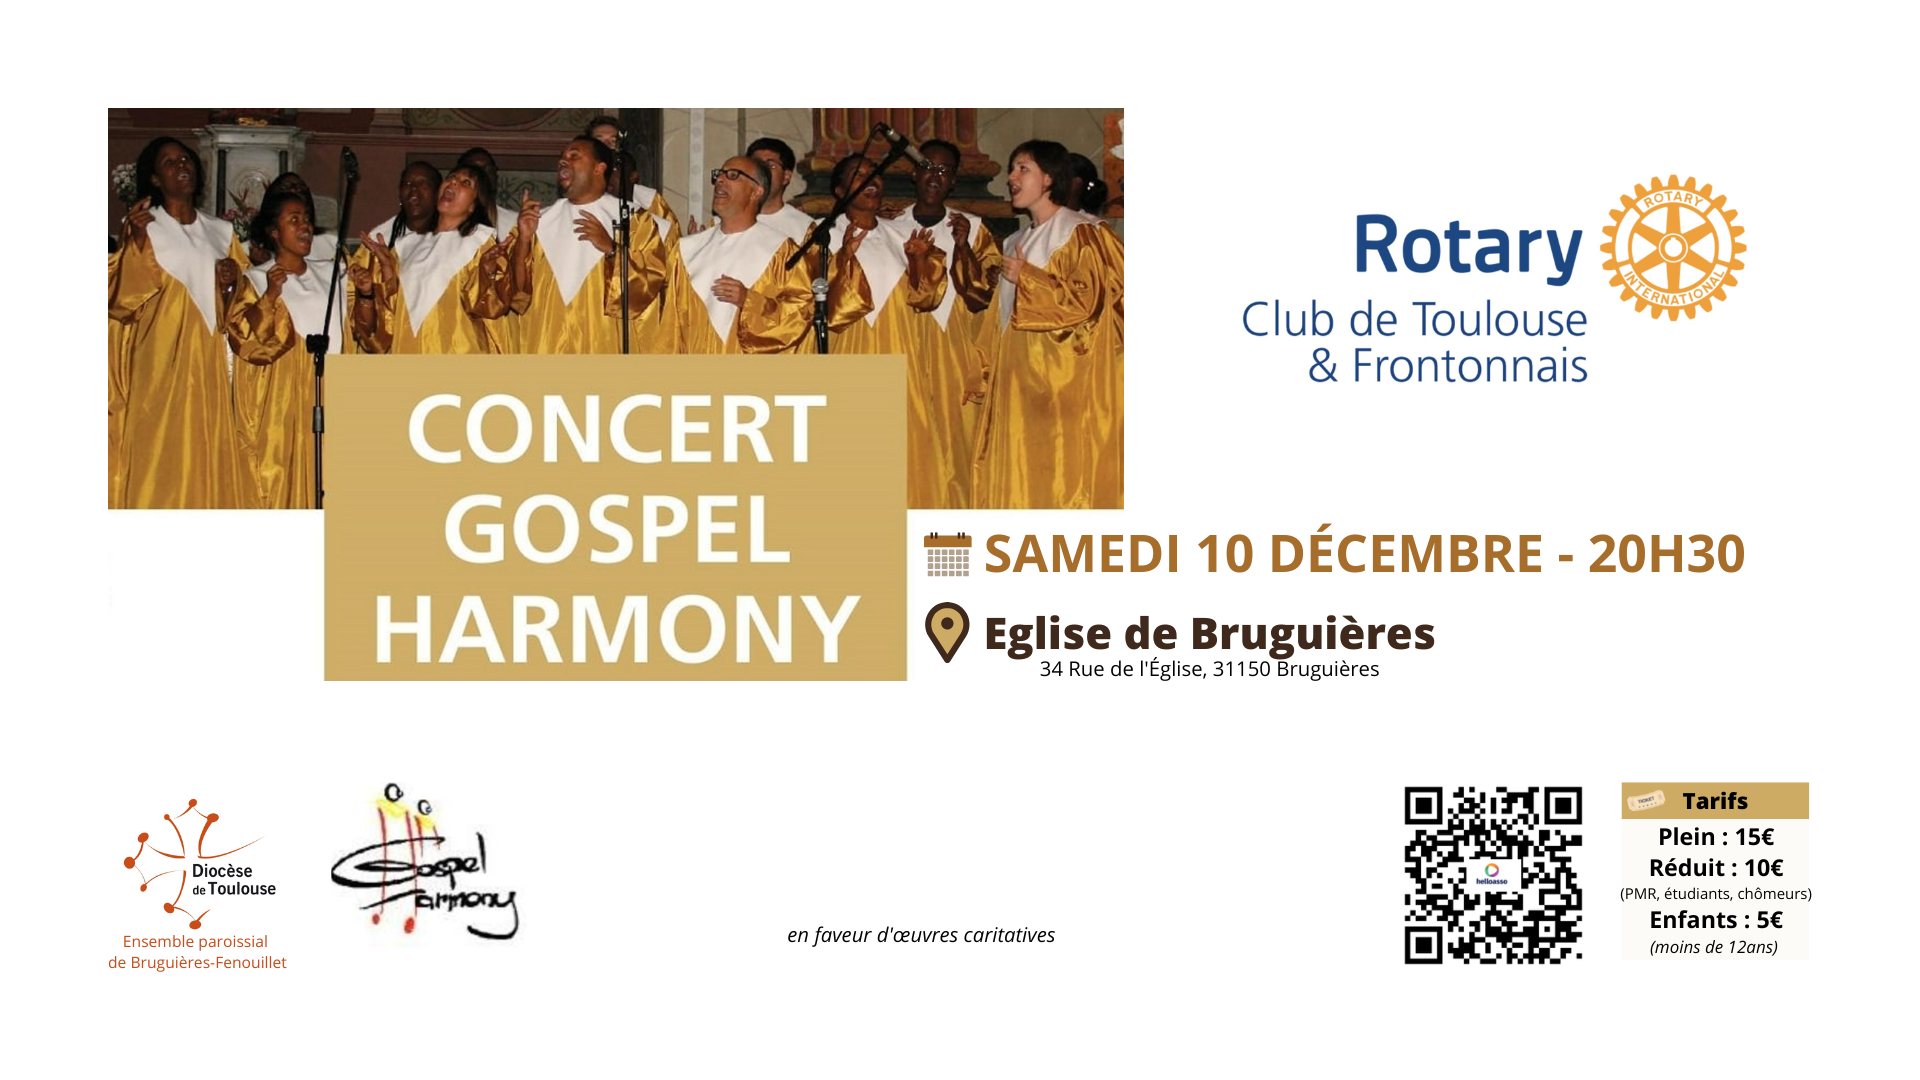 Concert Gospel Harmony en l’Eglise de Bruguières le 10/12/22